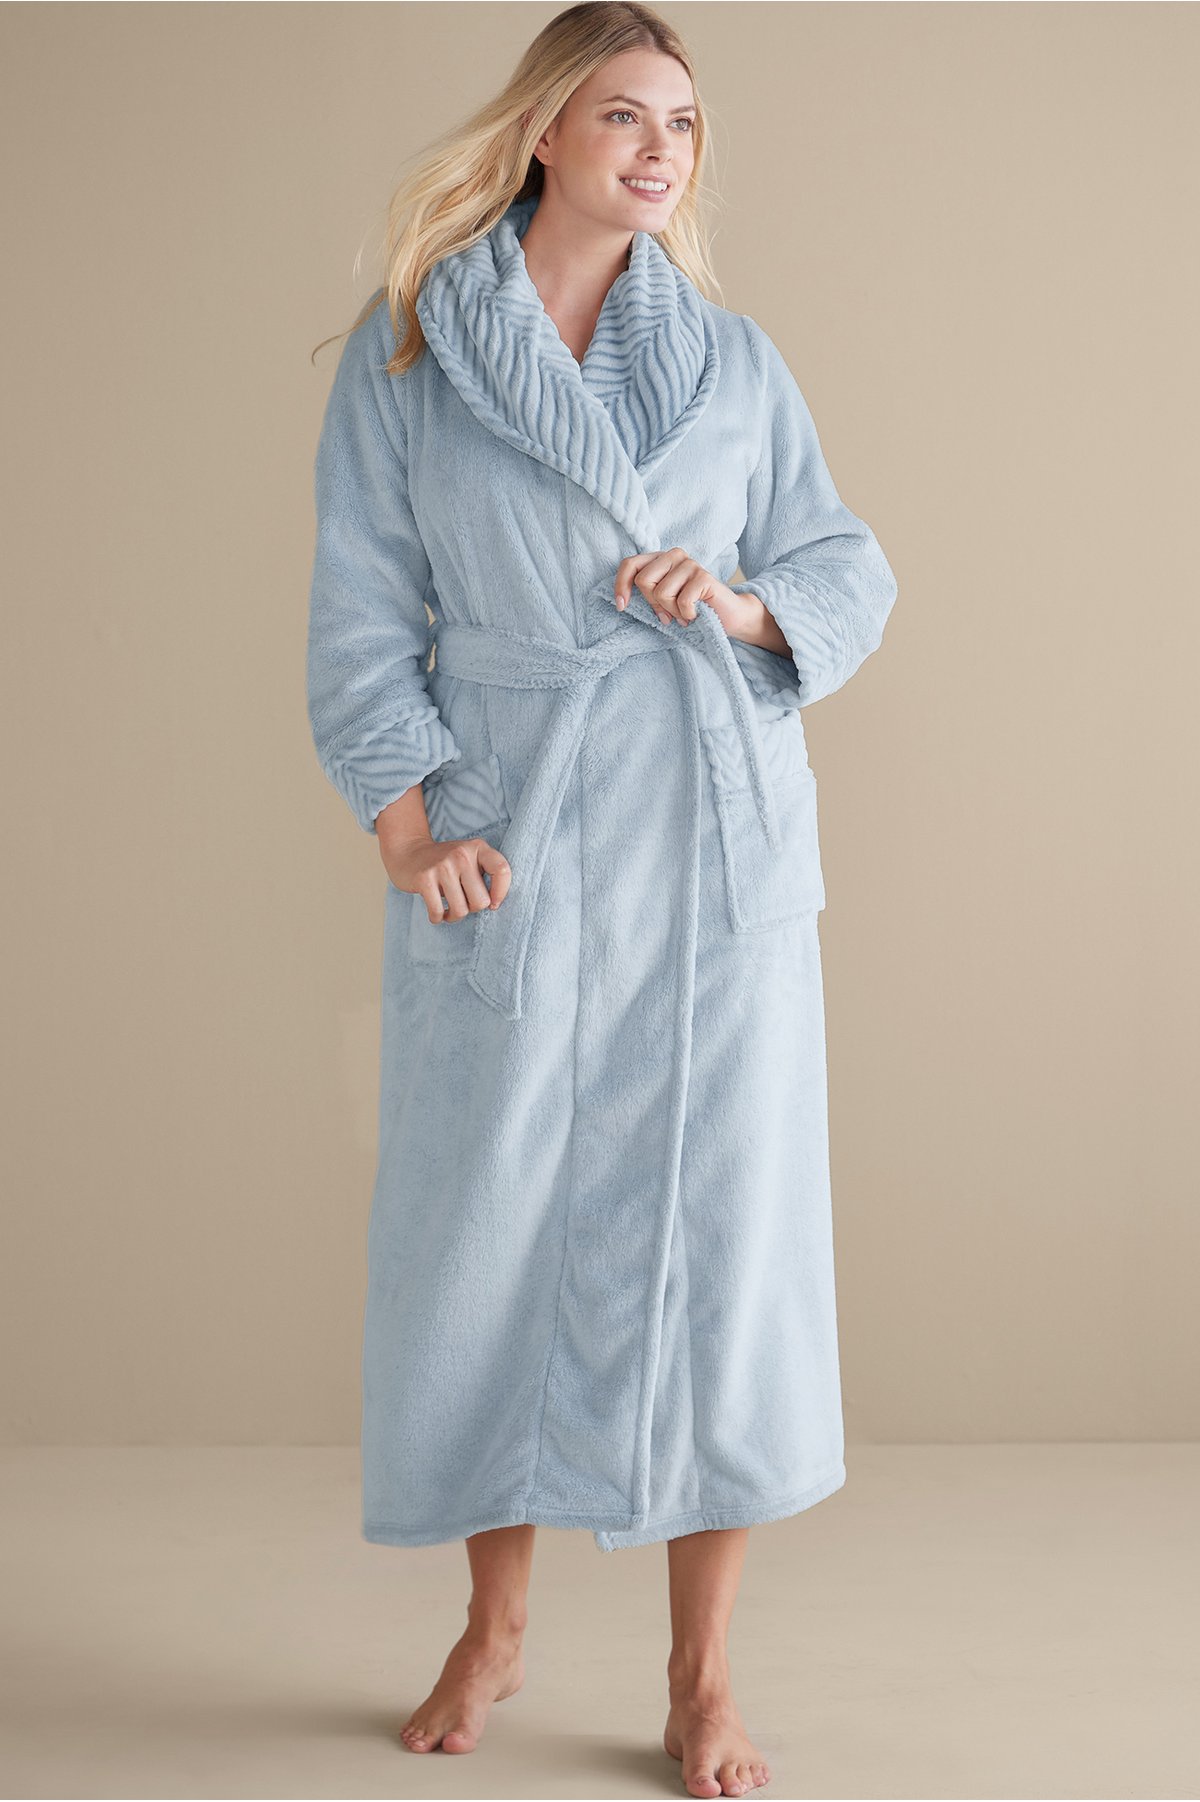 Women's Royal Plush Robe by Soft Surroundings, in Blue Fog size XS (2-4)